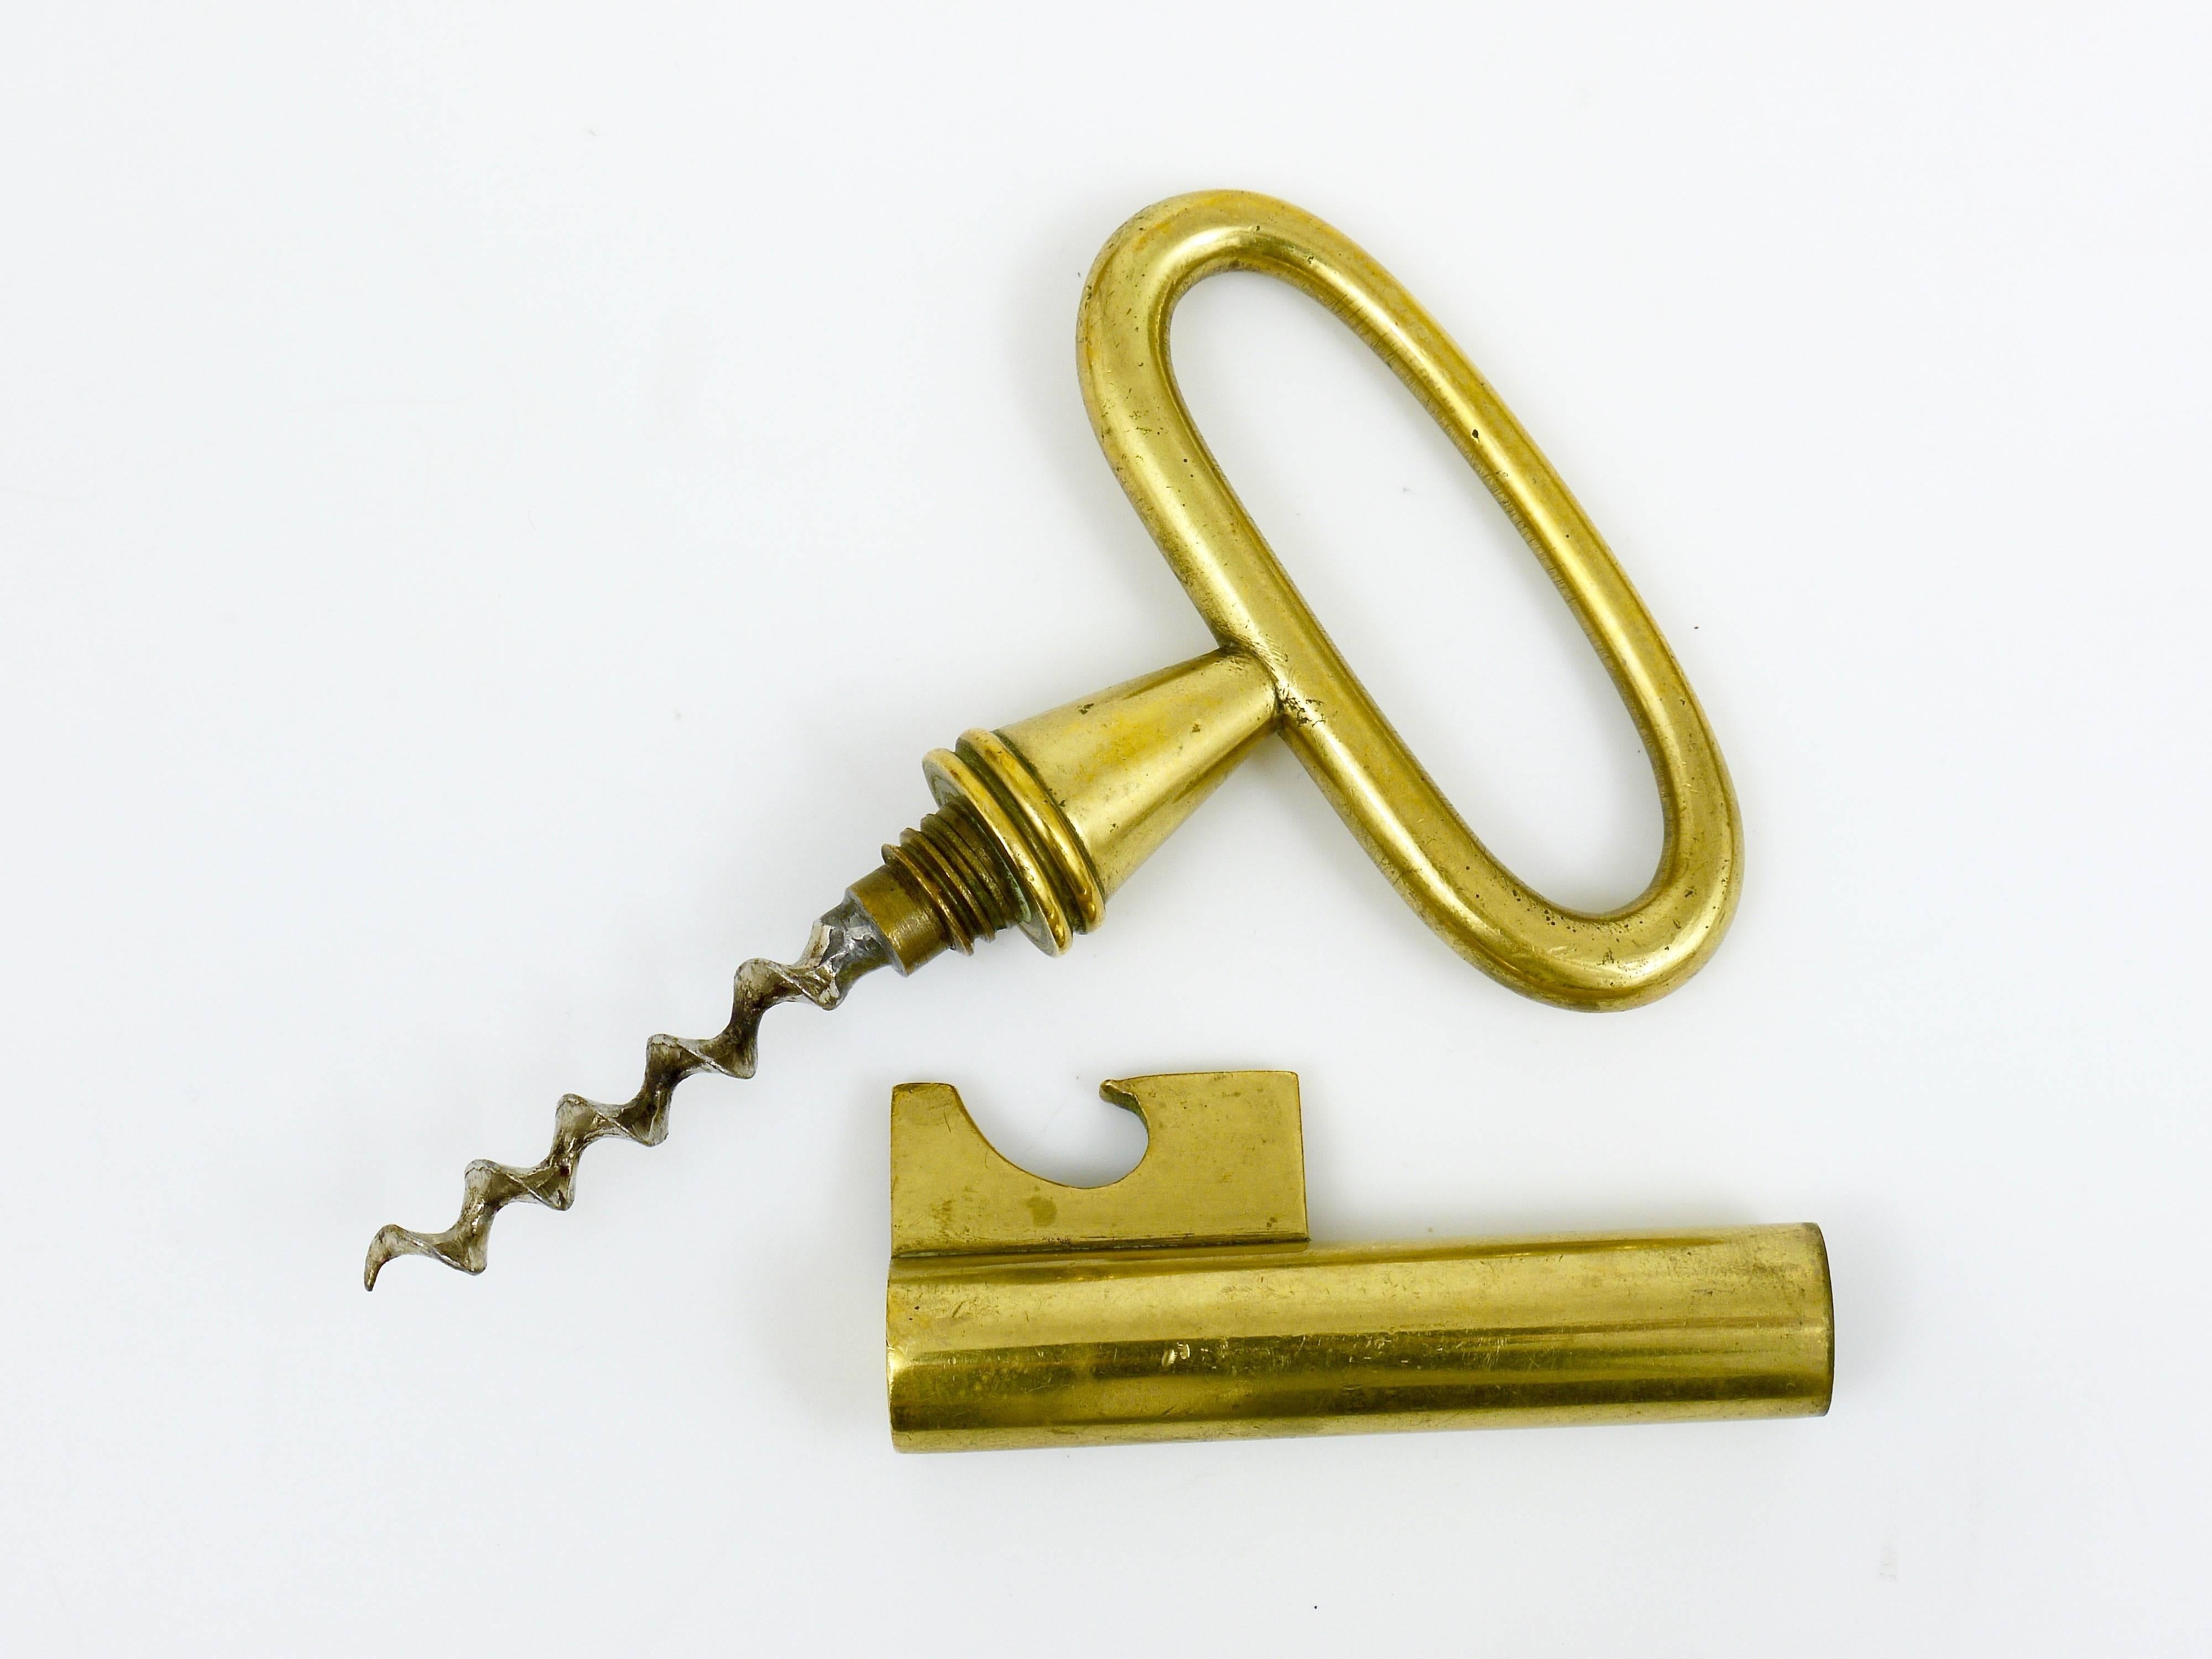 Mid-Century Modern Carl Aubock Big Brass Key Cork Screw, Bottle Opener Paperweight, Austria, 1950s For Sale